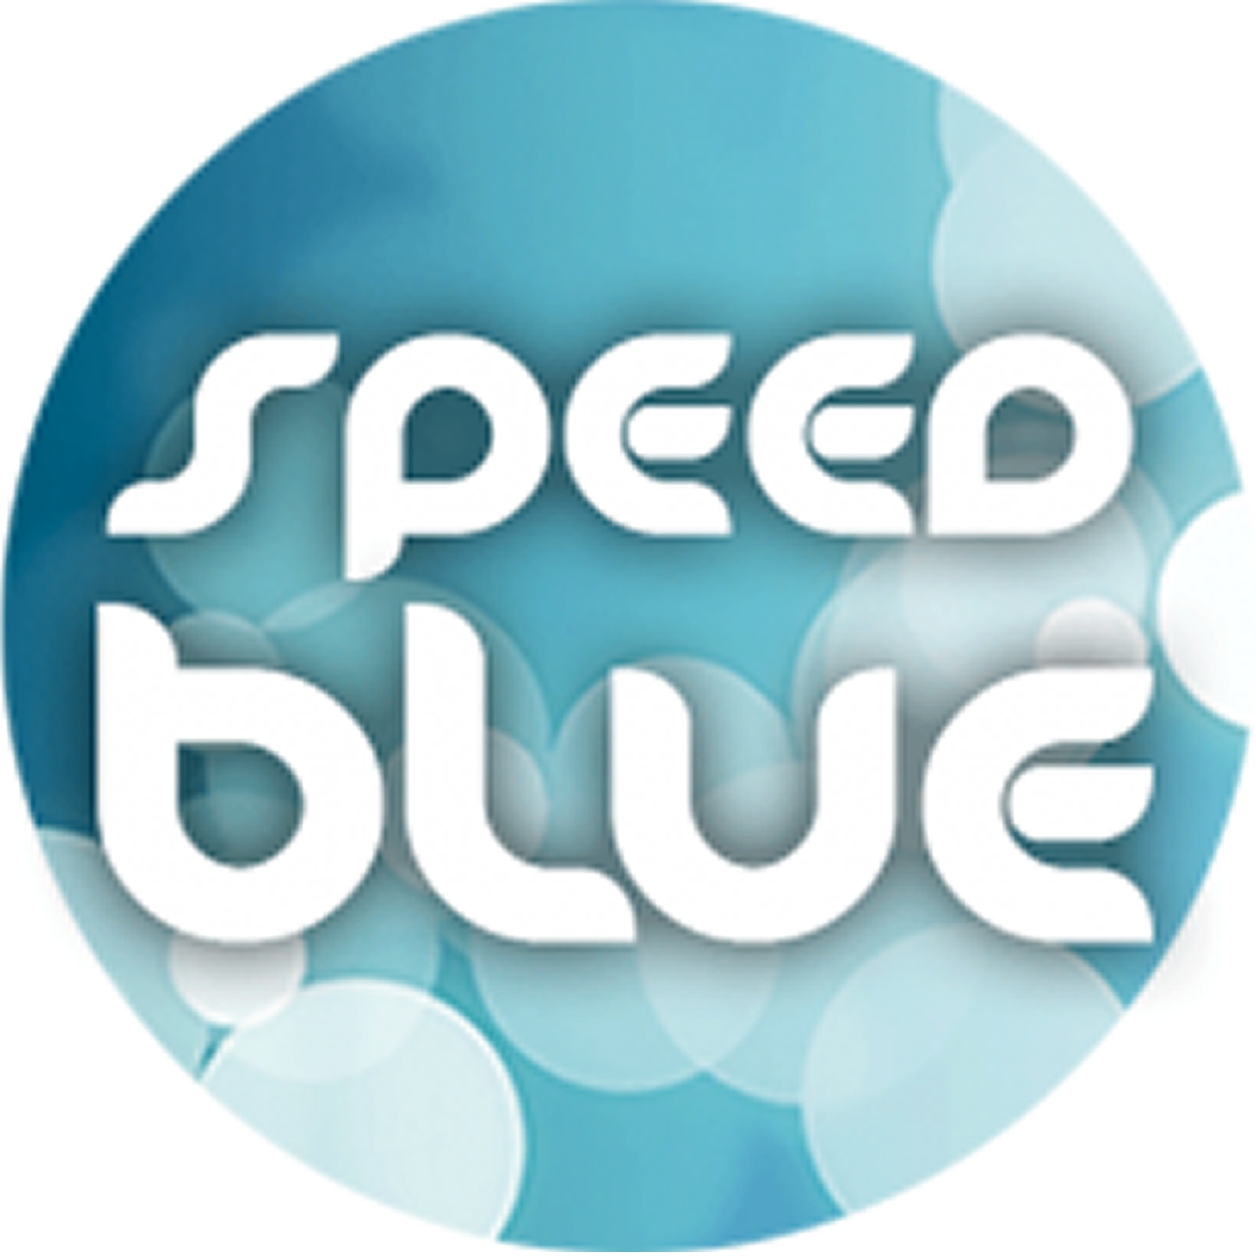 Speed Blue